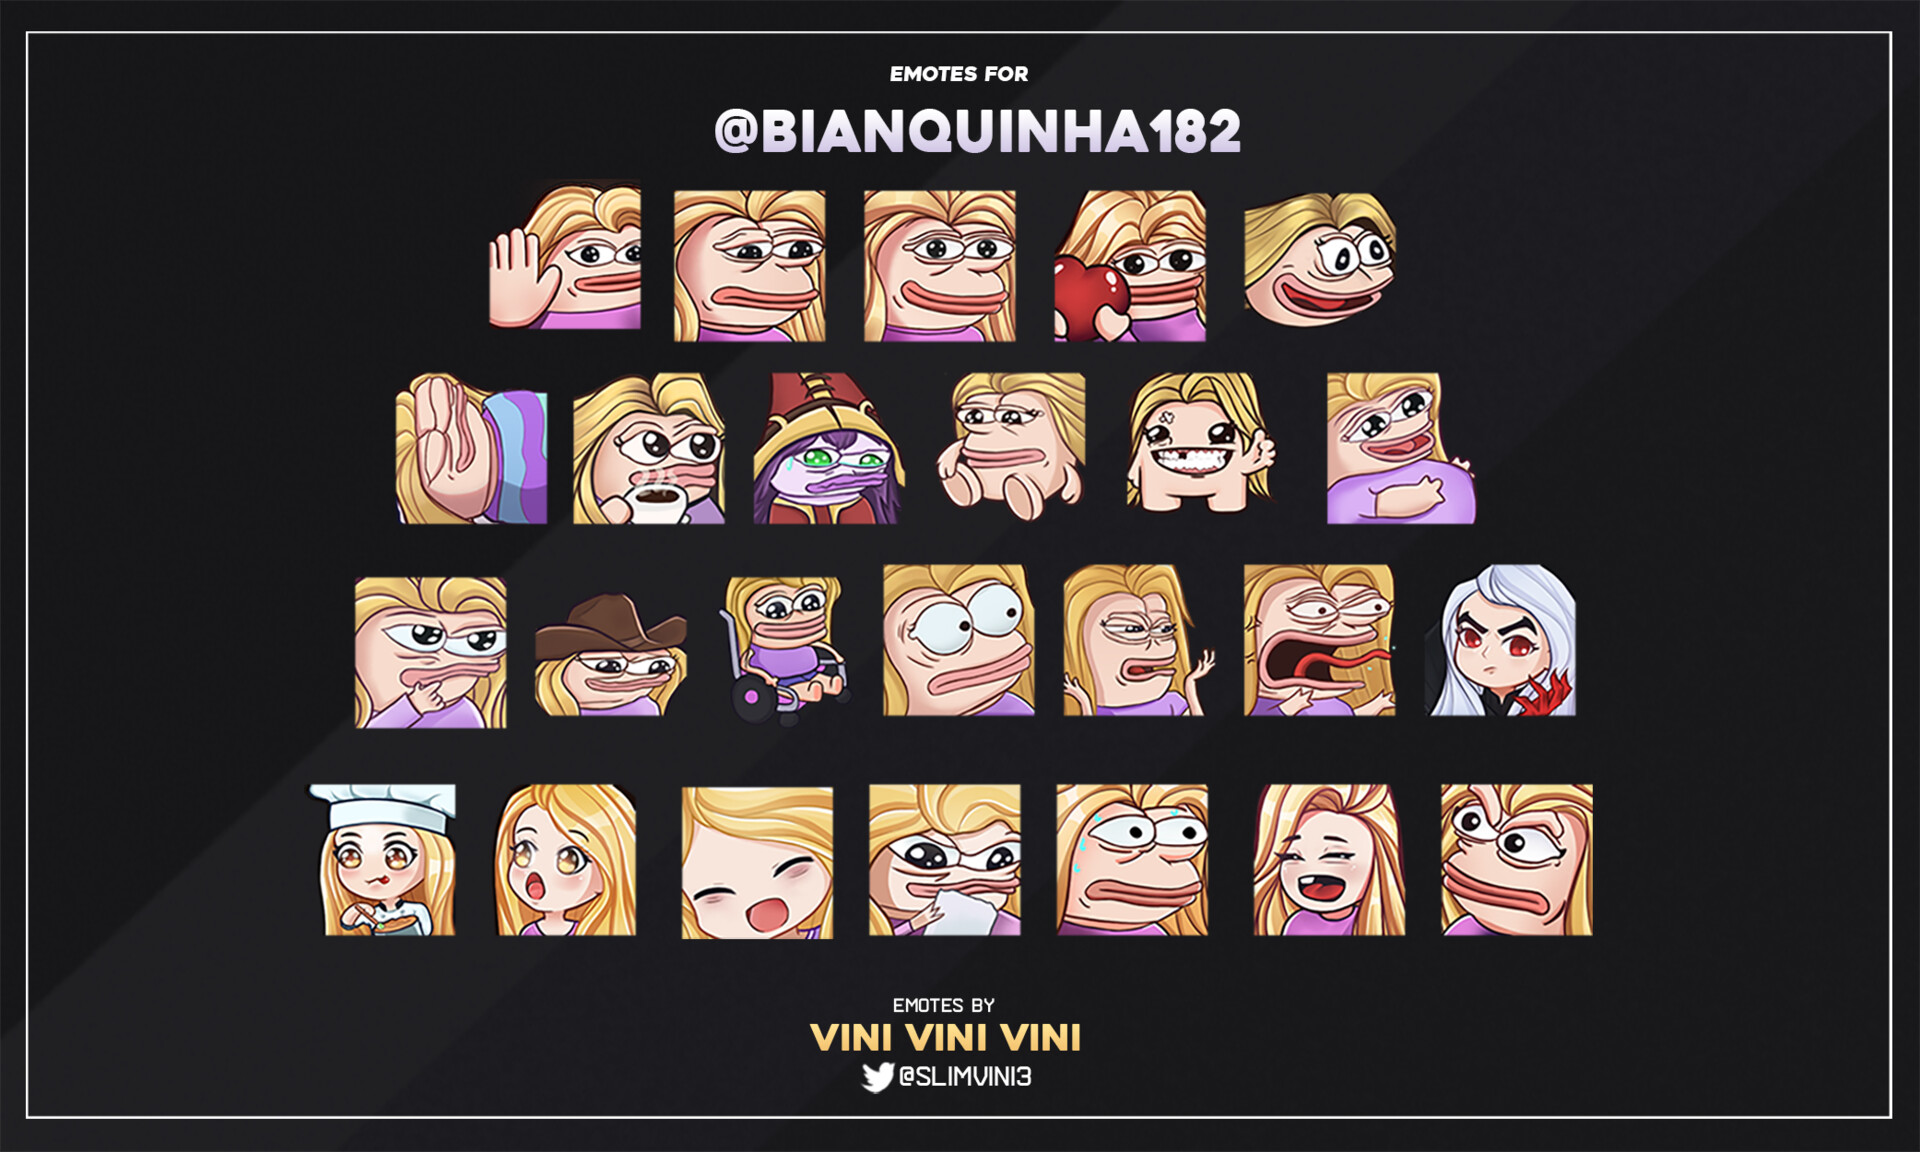 Vini Vini Vini - ALL twitch emotes and badges 2020